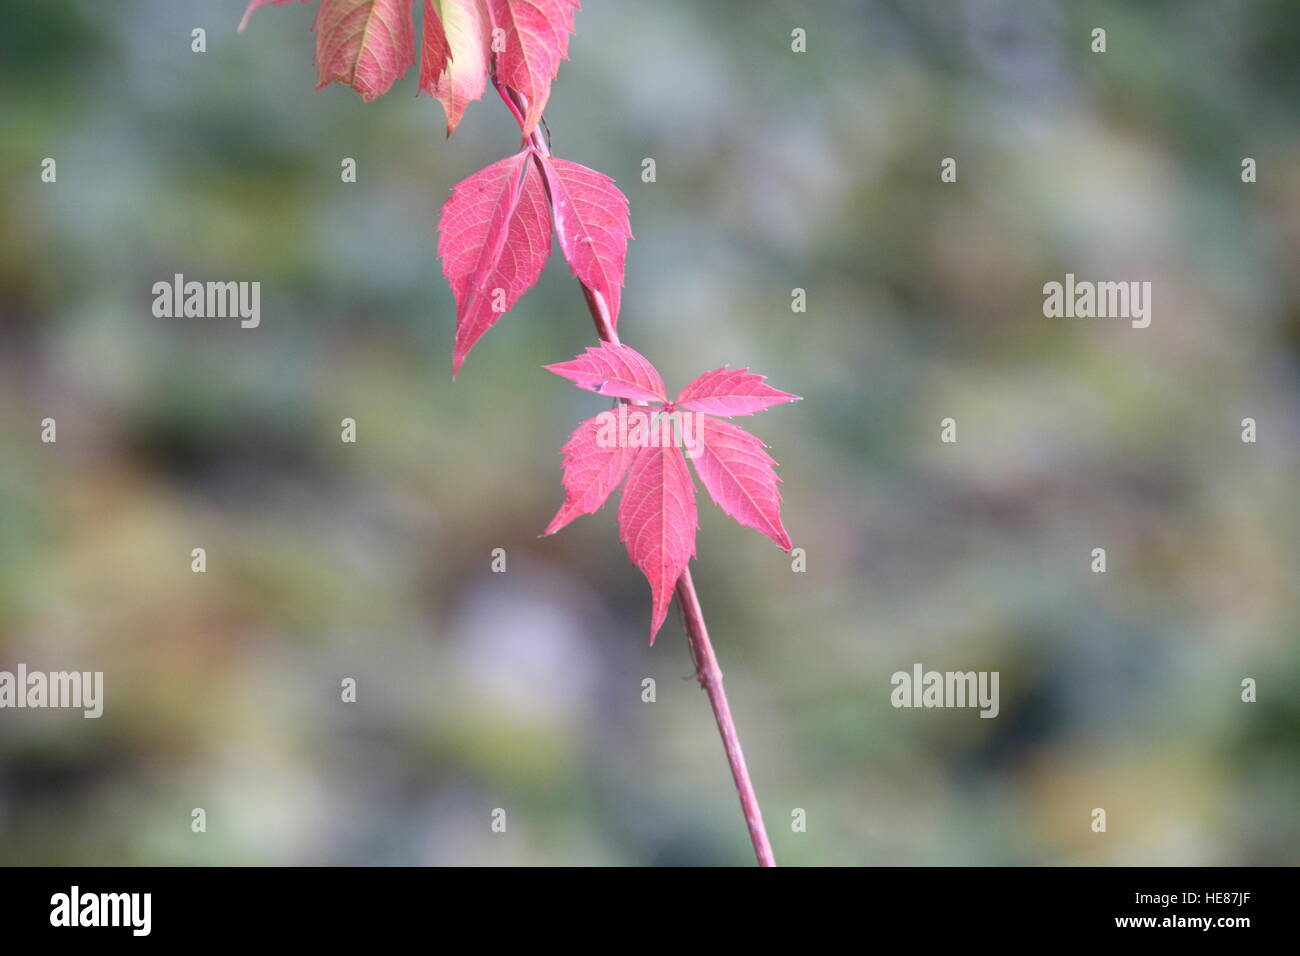 Amazing nature autumn background with leaves Stock Photo